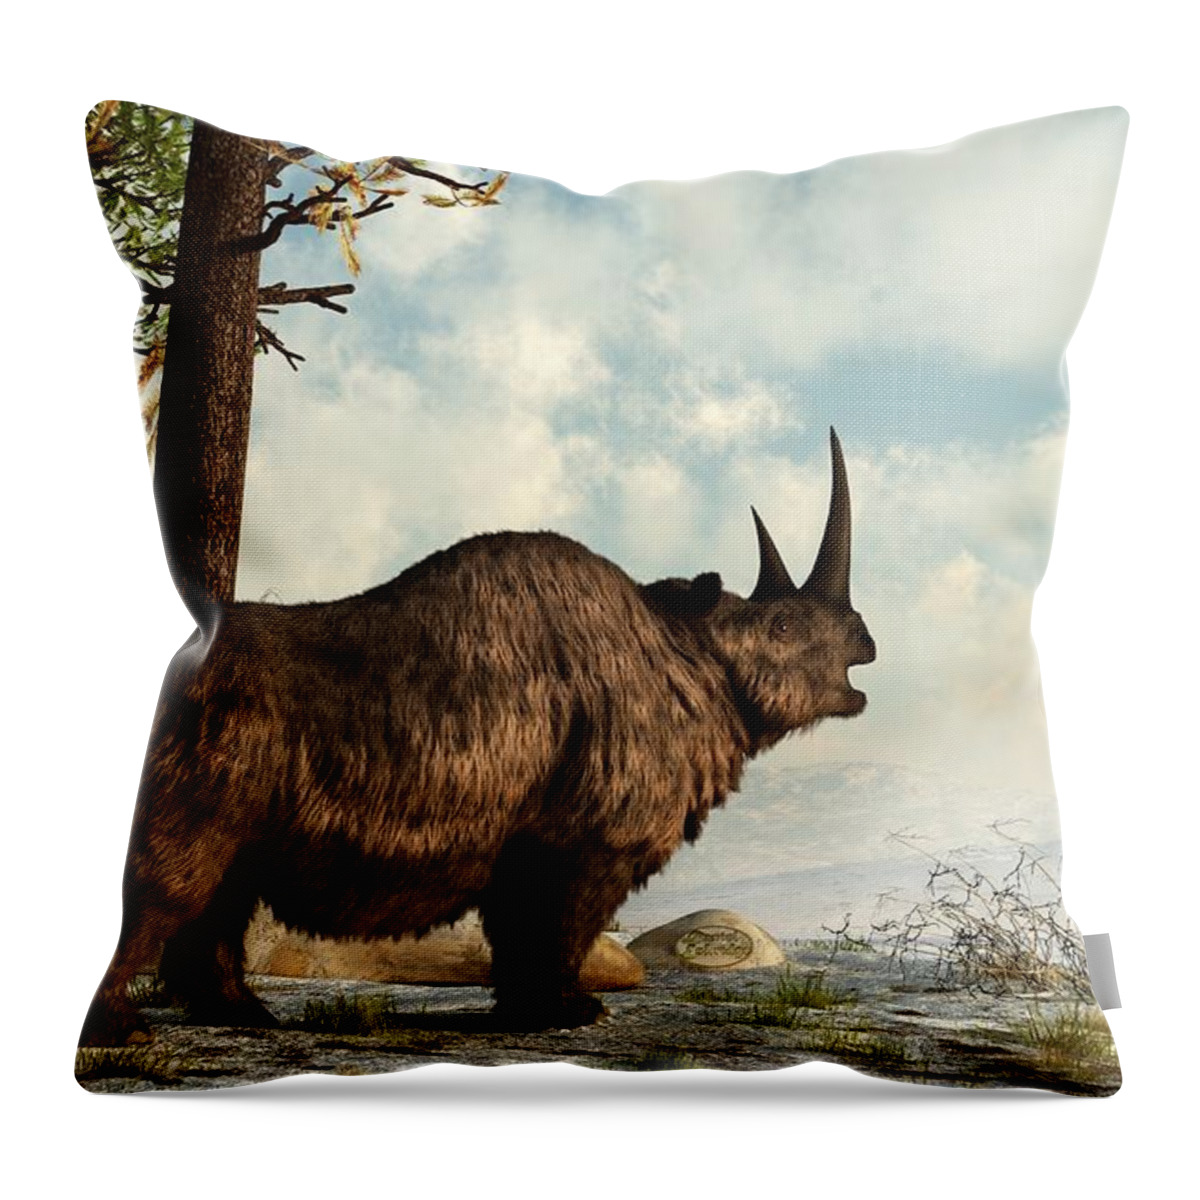 Animal Throw Pillow featuring the digital art Woolly Rhino by Daniel Eskridge